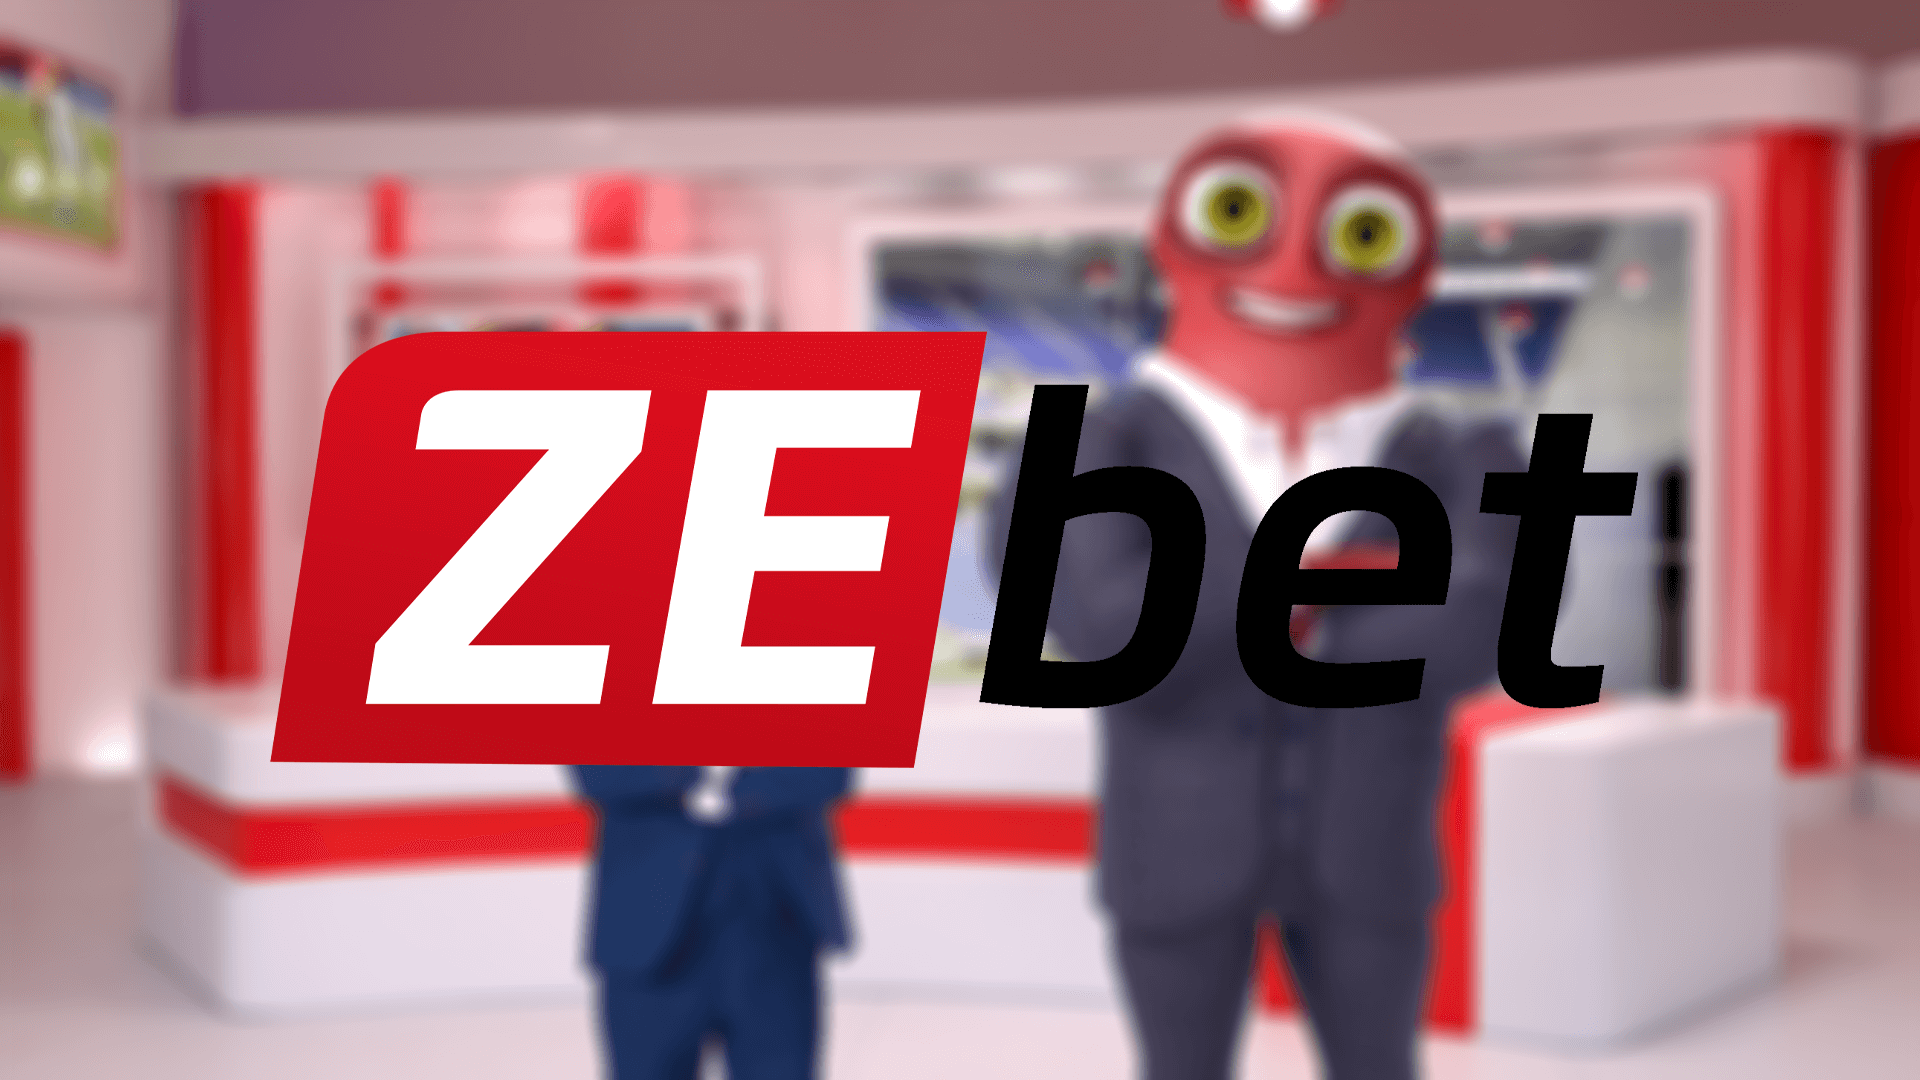 ZEbet Casino